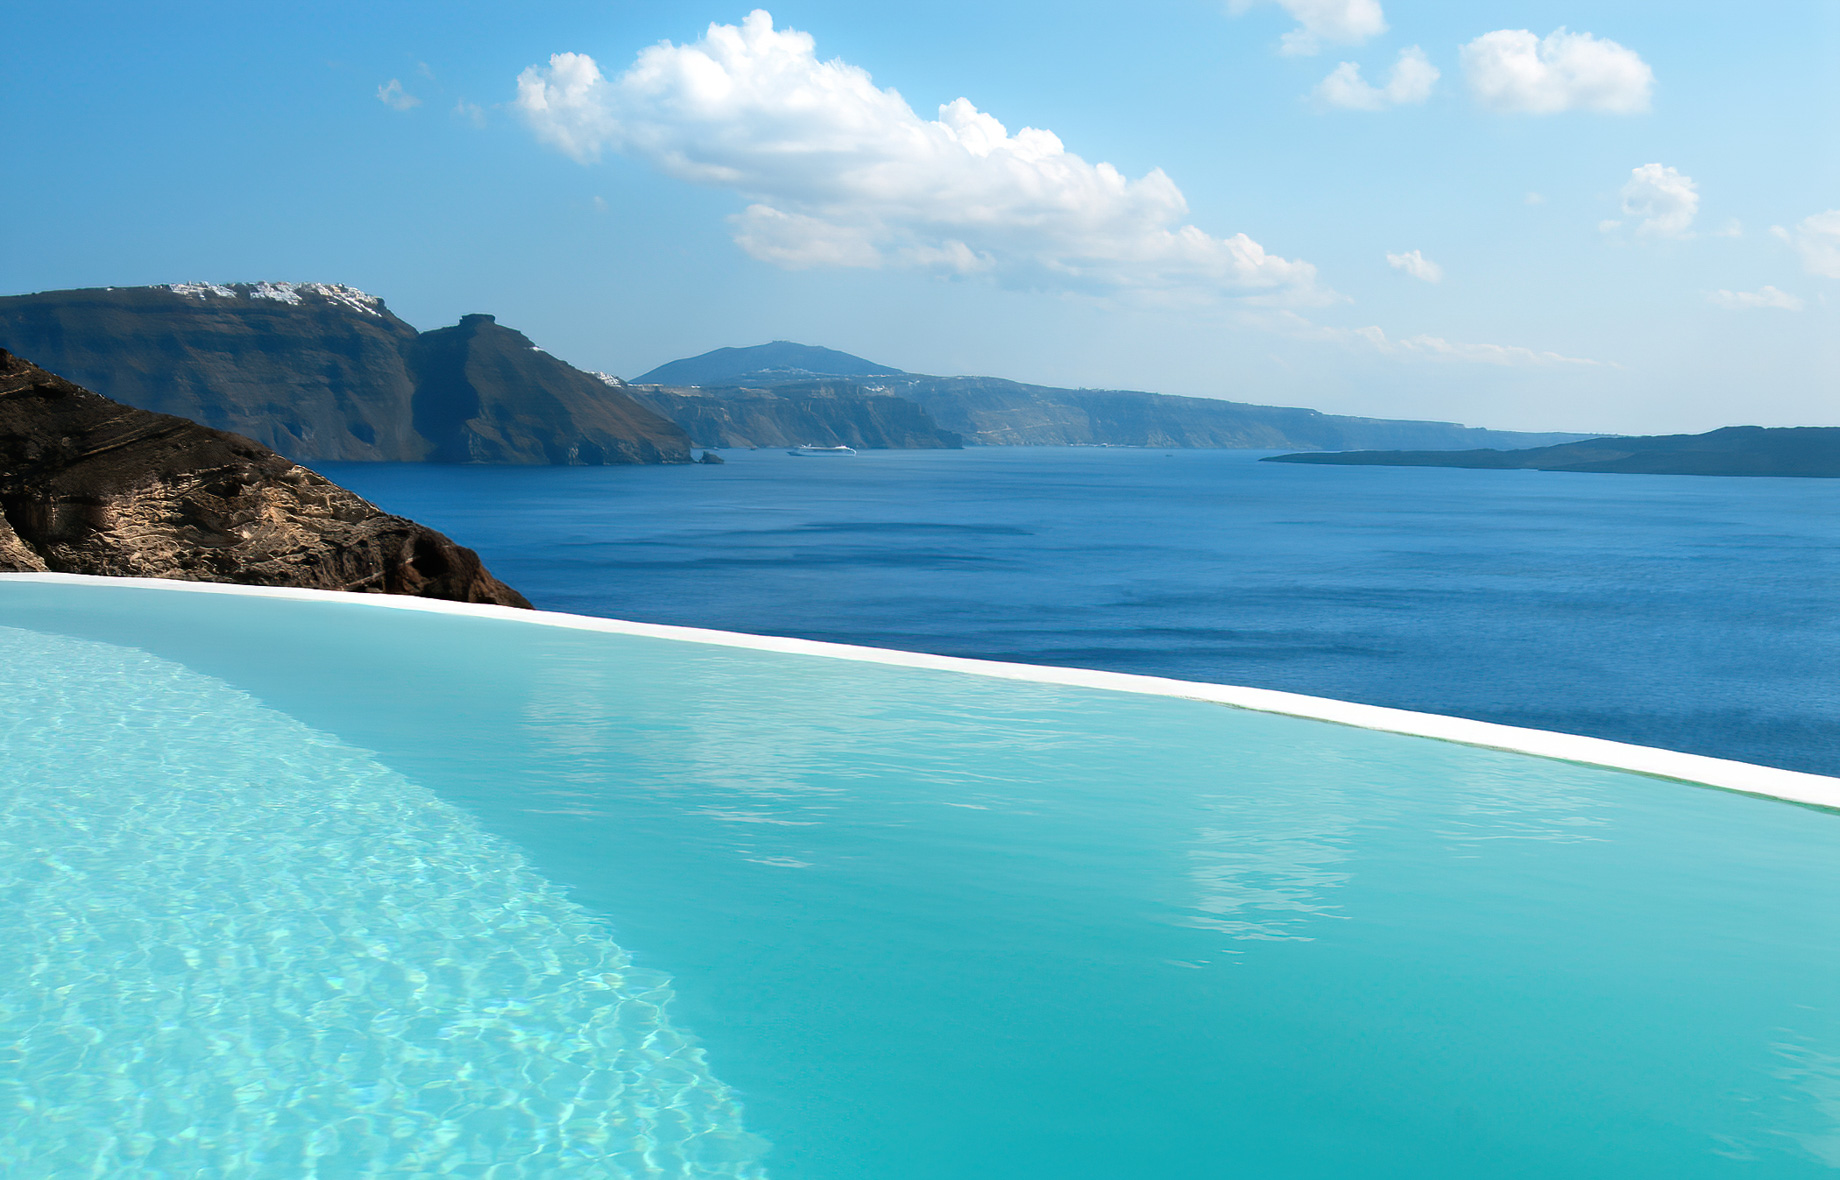 Mystique Hotel Santorini – Oia, Santorini Island, Greece – Infinity Pool View